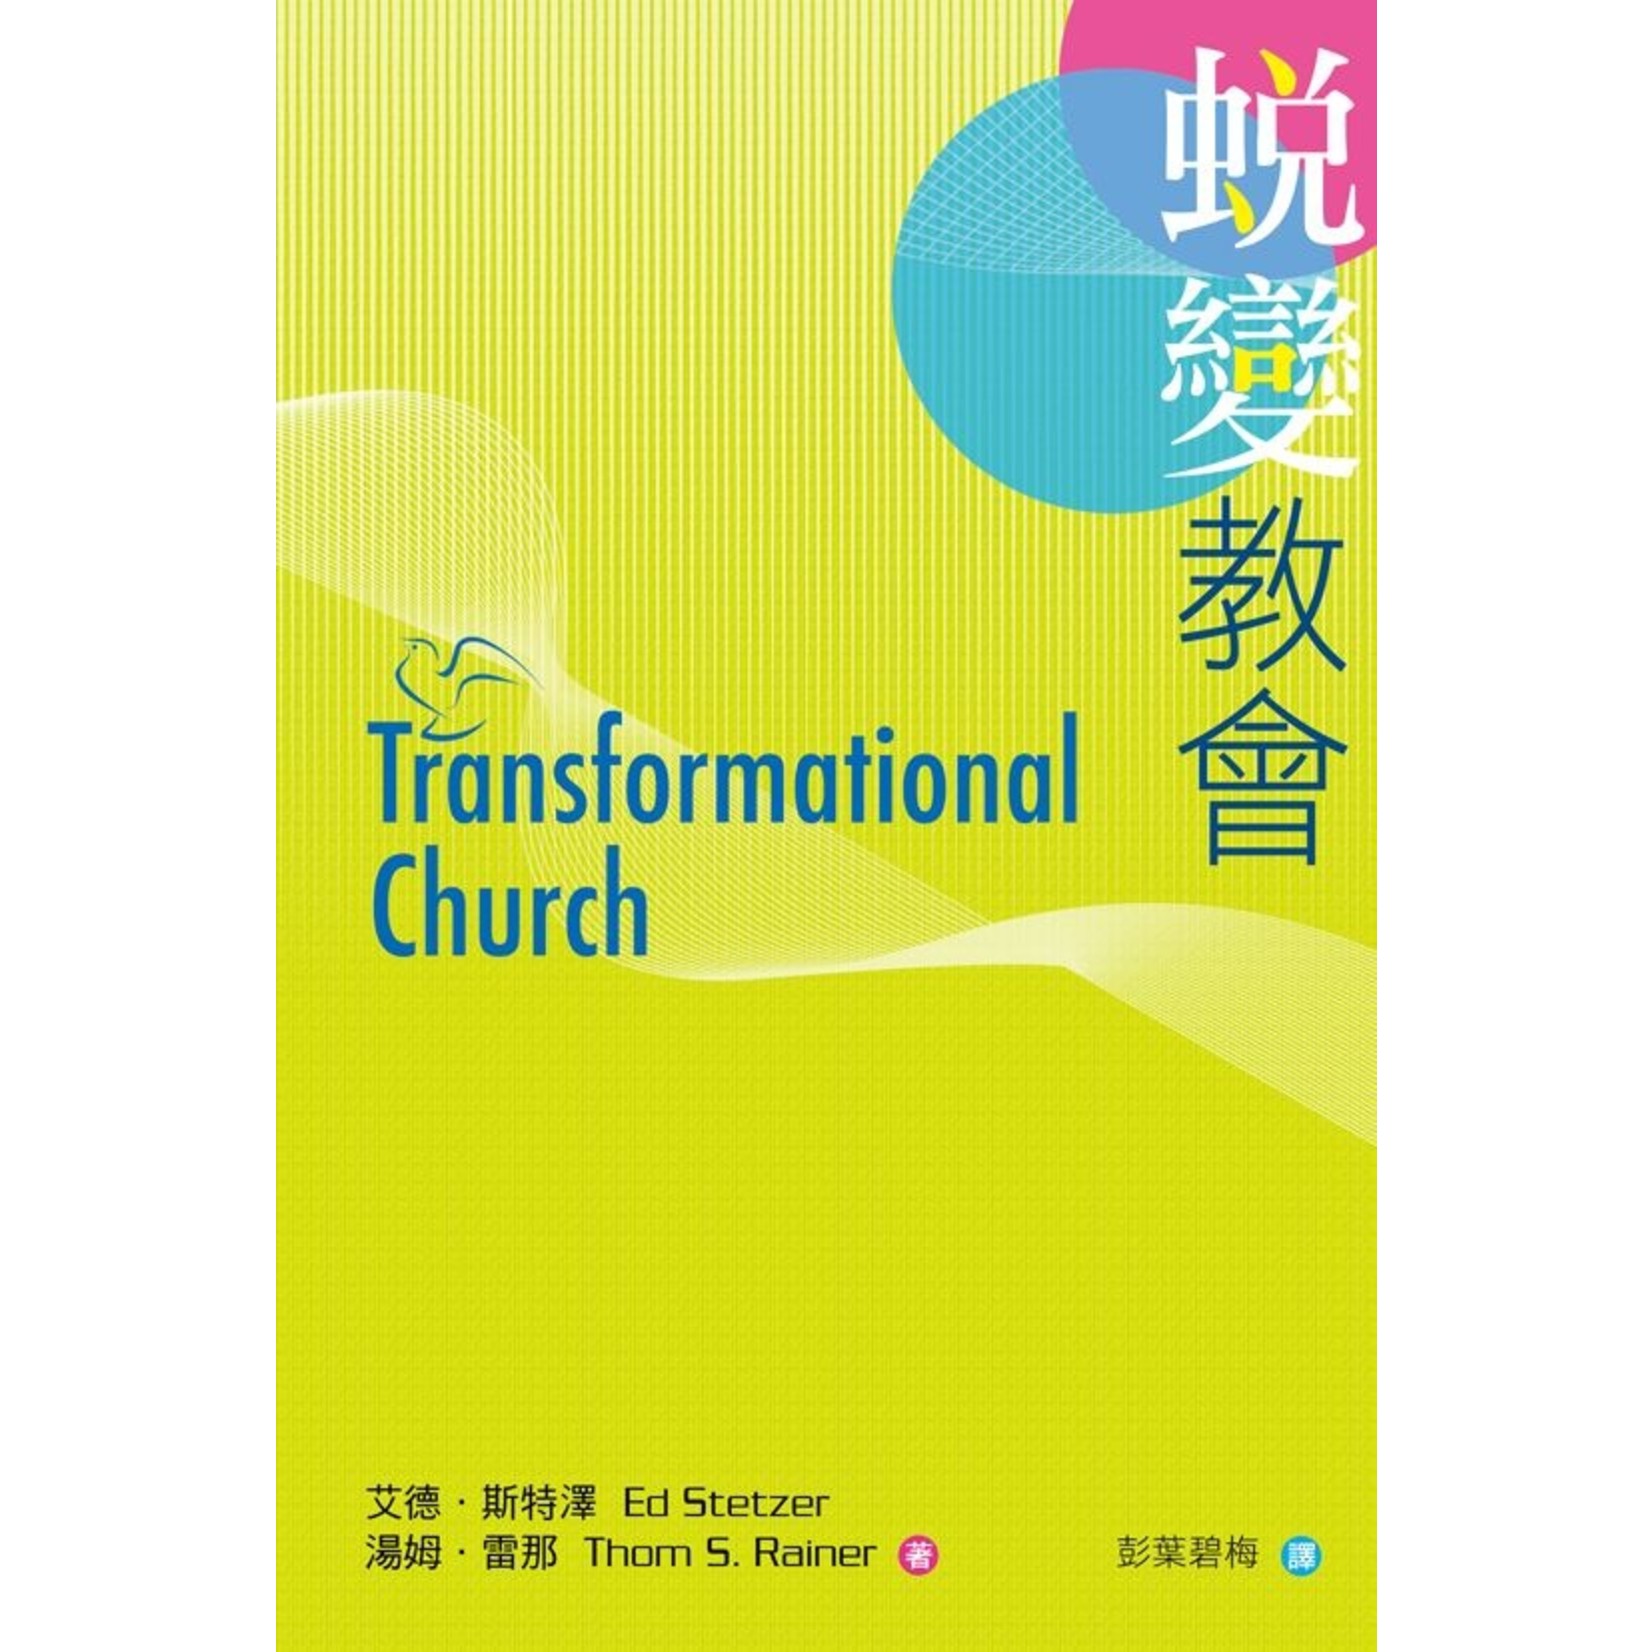 天道書樓 Tien Dao Publishing House 蛻變教會 | Transformational Church